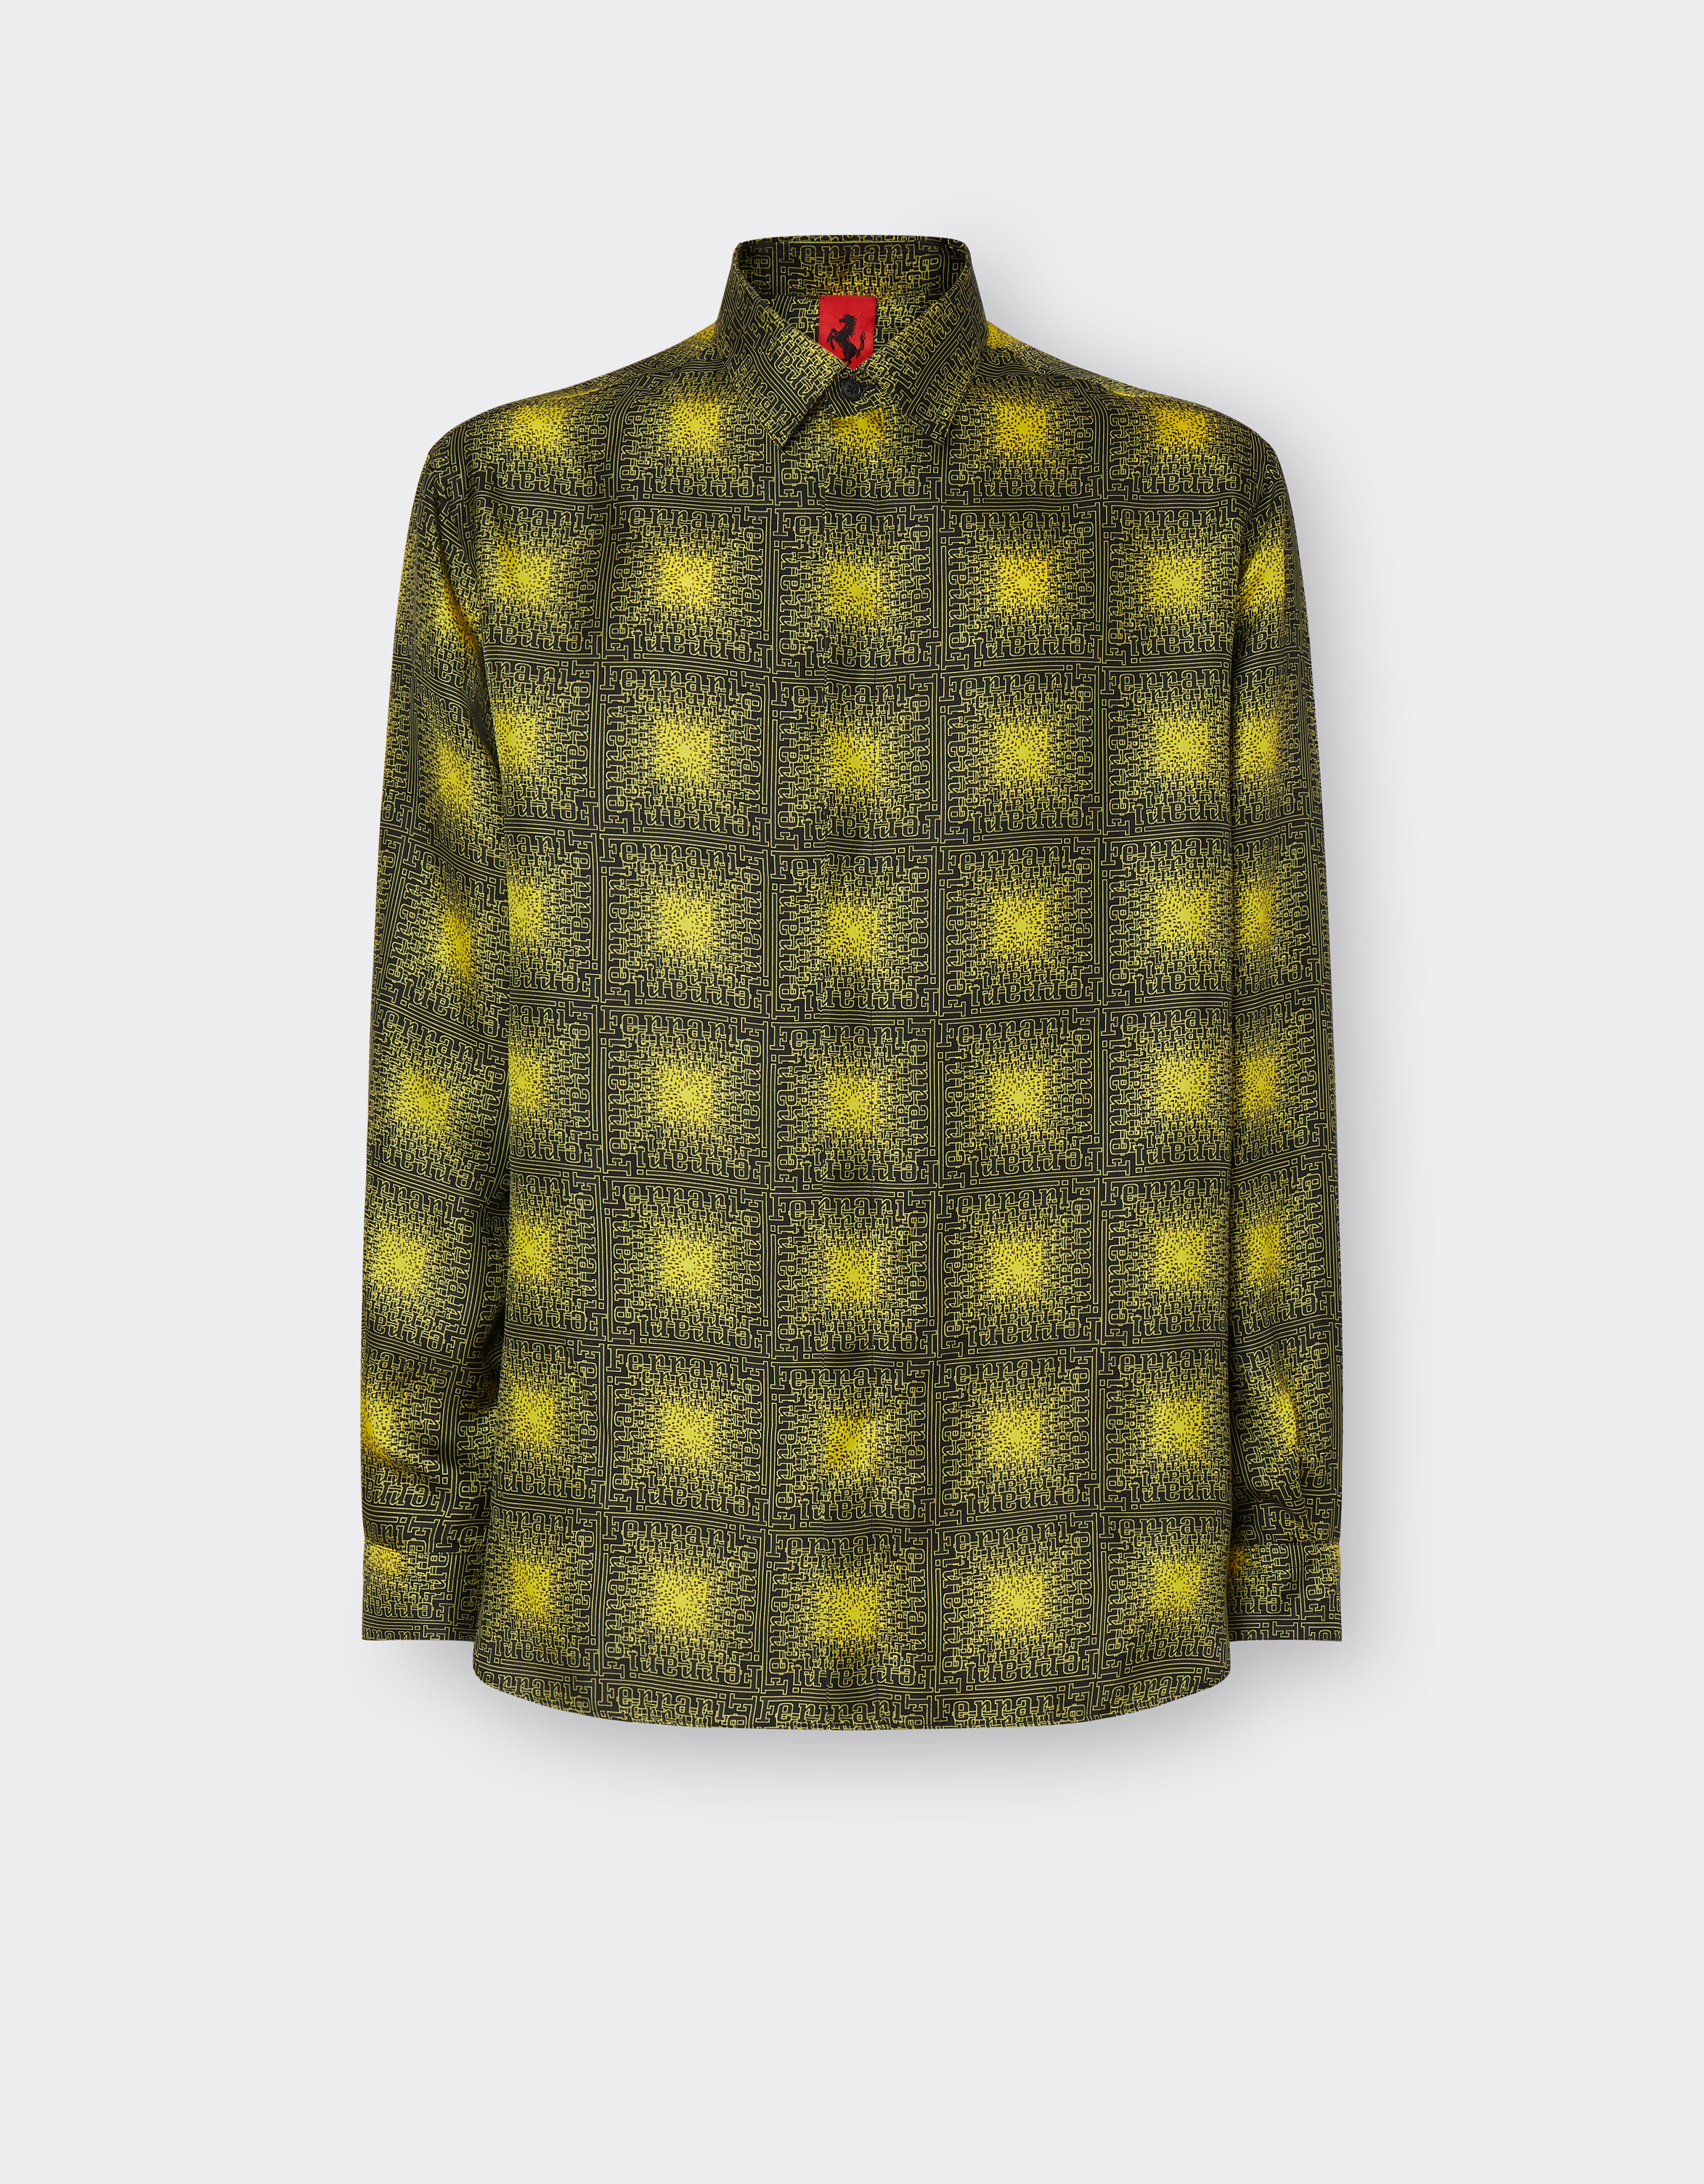 Ferrari Silk twill shirt with 7X7 check print Giallo Modena 48314f